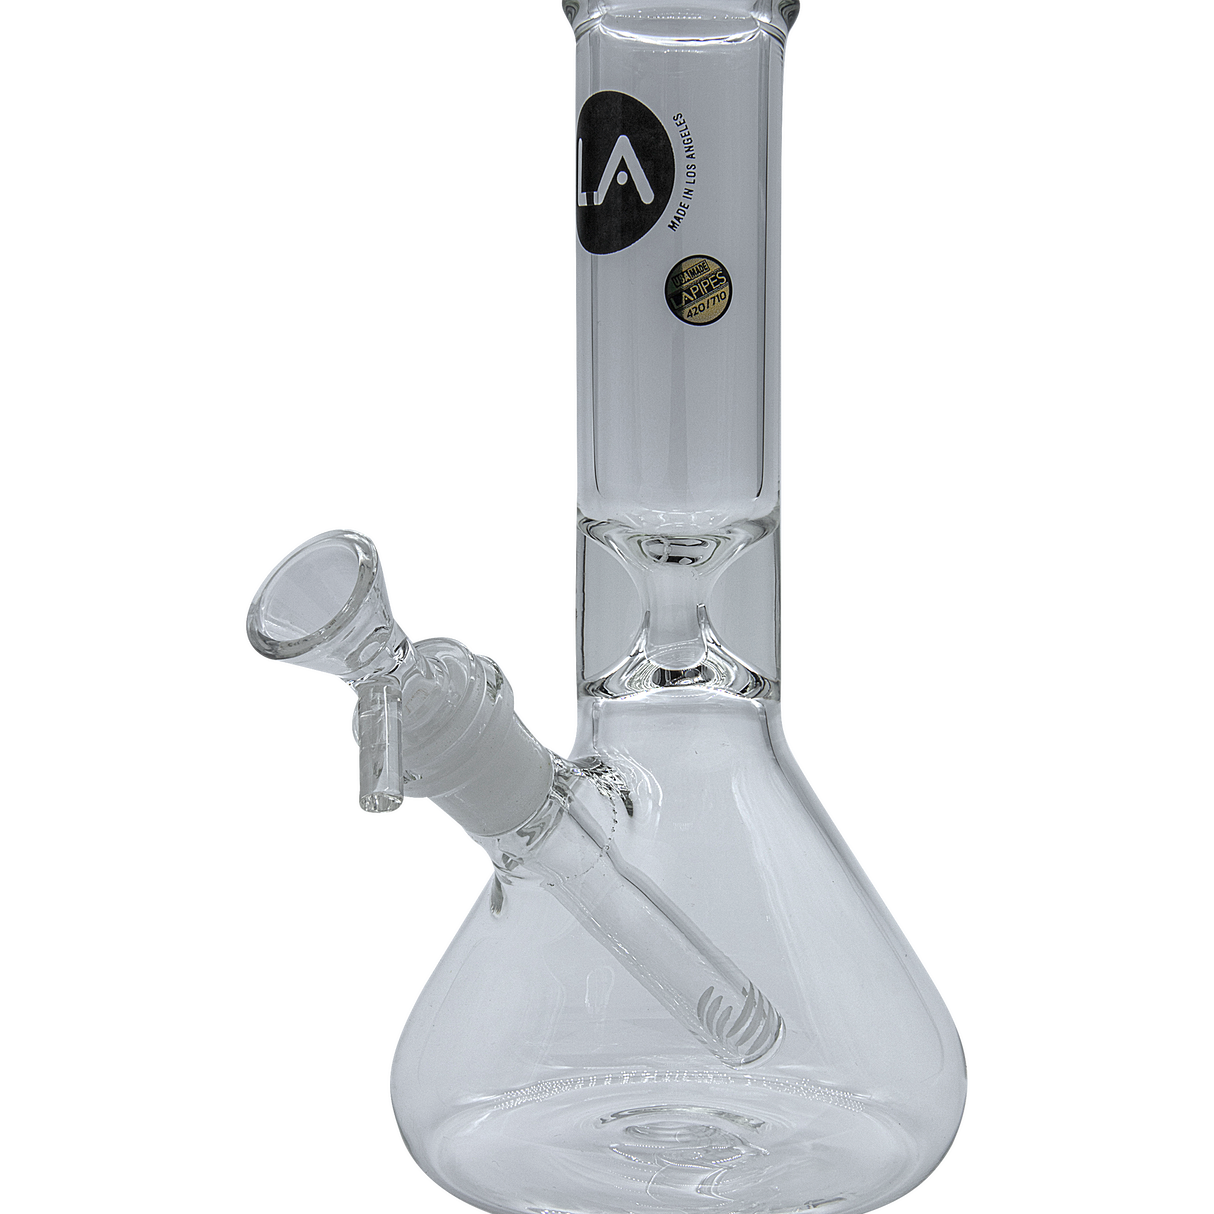 LA Pipes "Shortstop" Beaker Bong, 10" Borosilicate Glass, Side View with Downstem